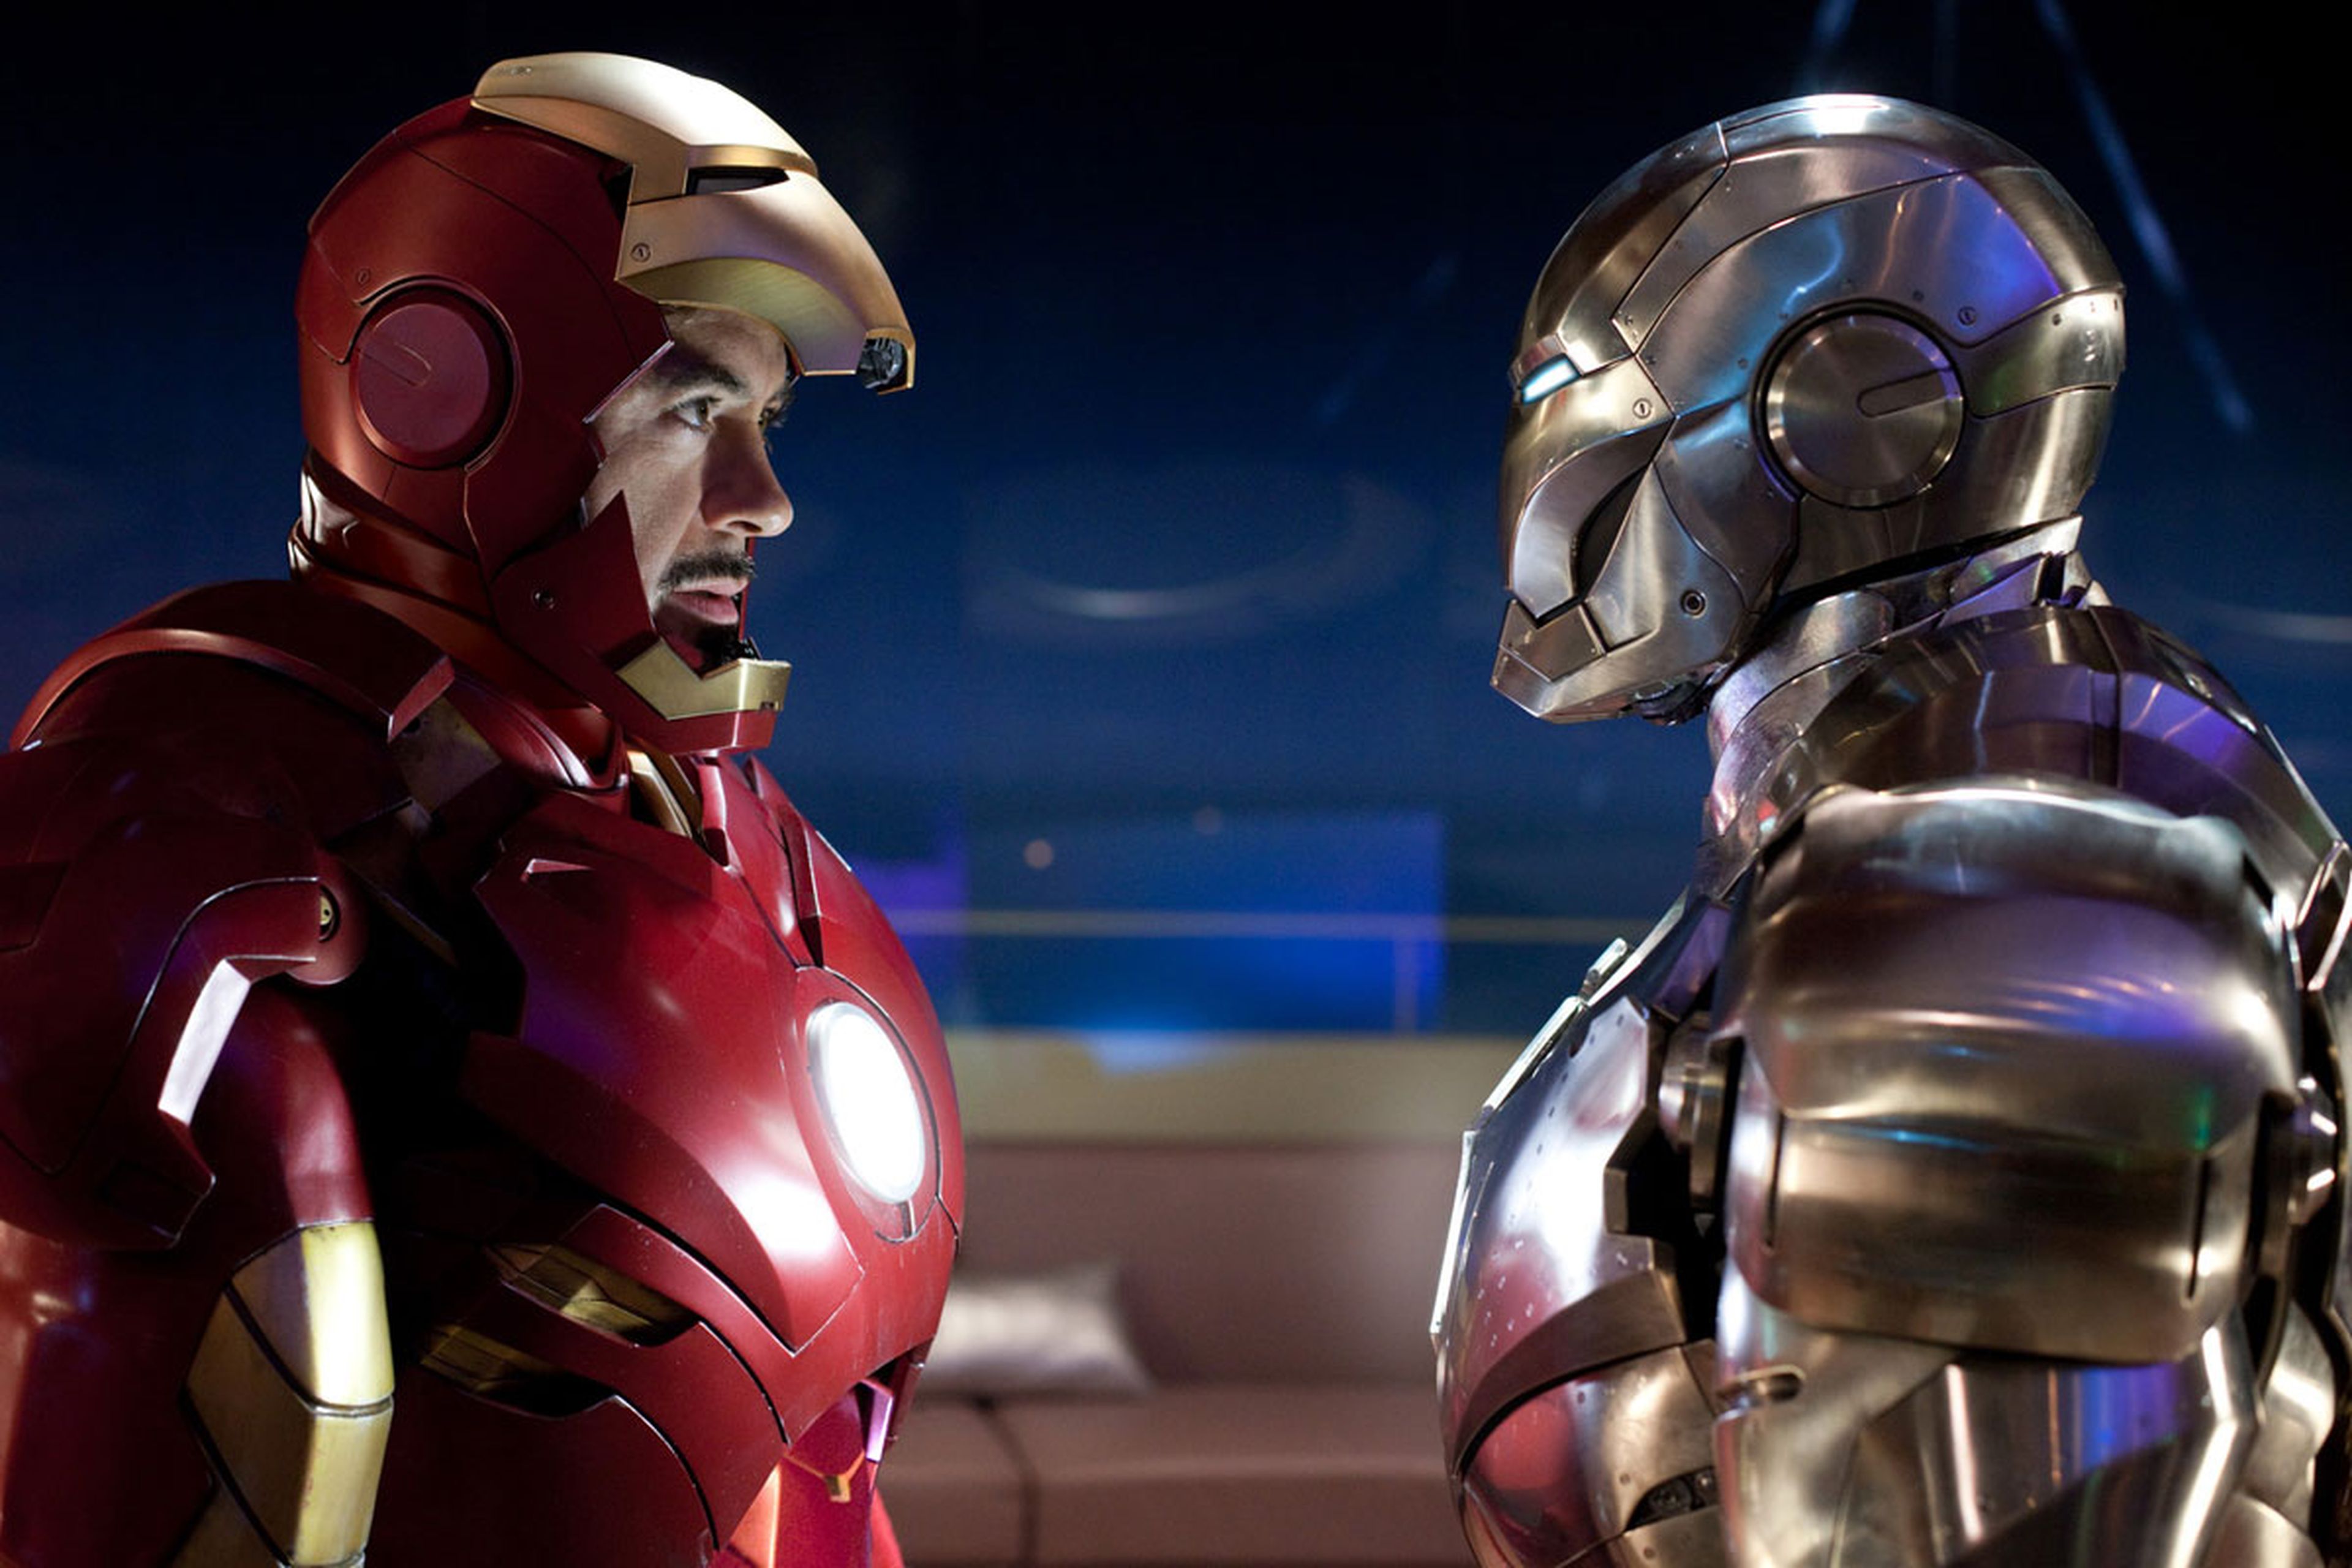 Cine de superhéroes: Crítica de Iron Man 2